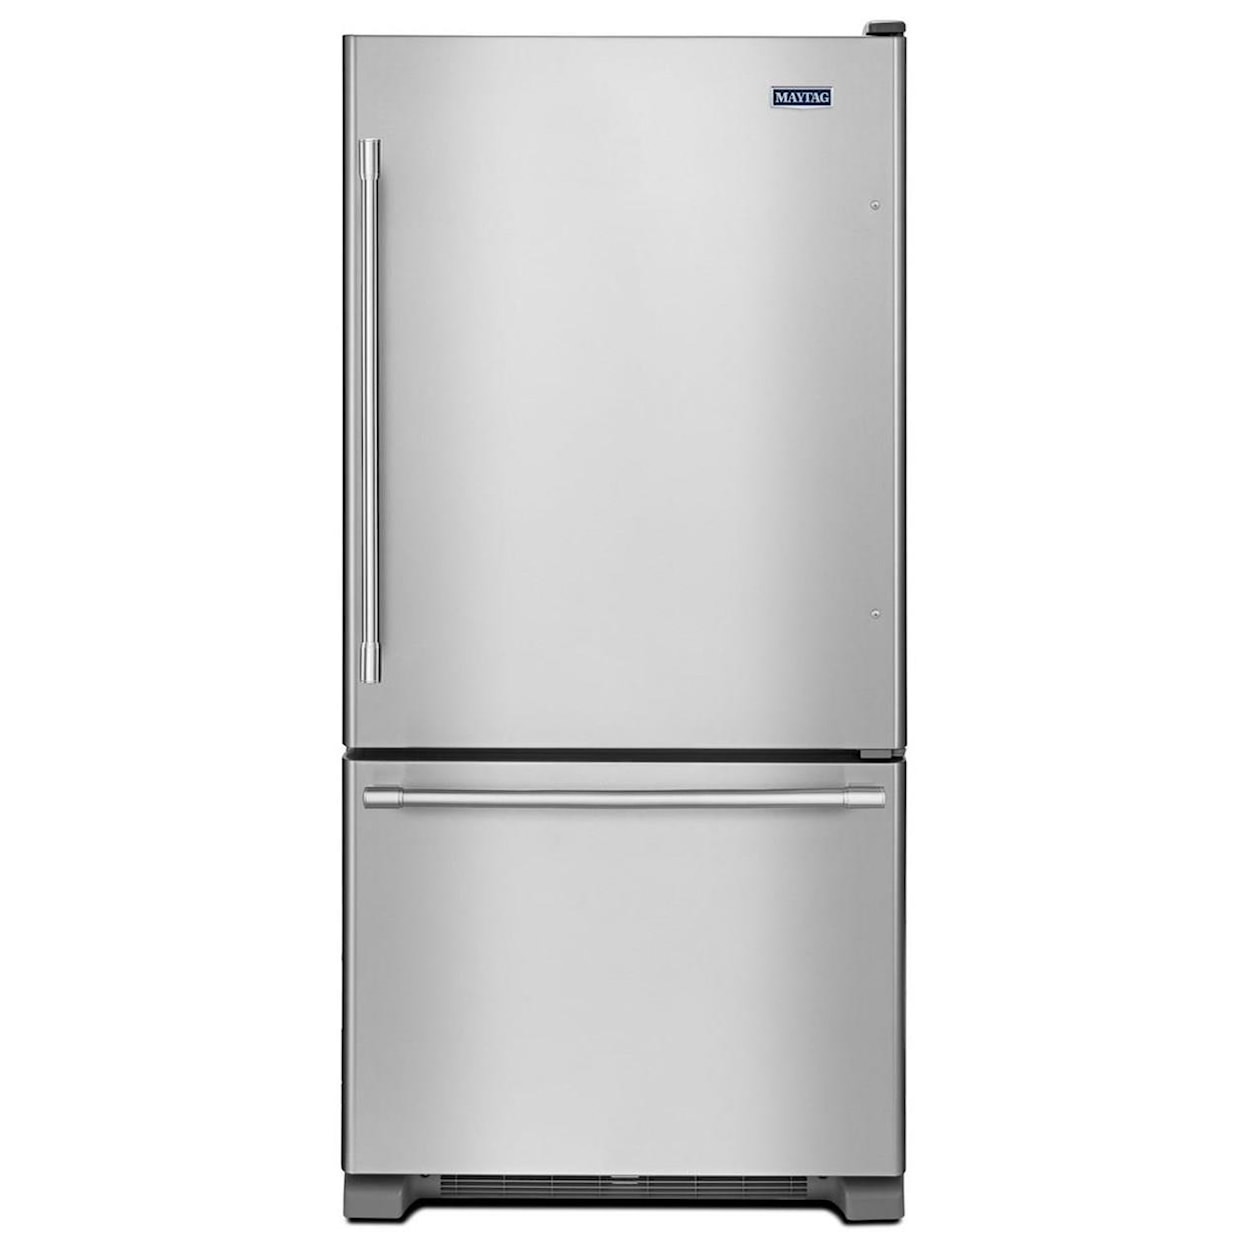 Maytag Bottom Freezer Refrigerators - Maytag 30-Inch 19 Cu. Ft. Bottom Mount Refrigerator